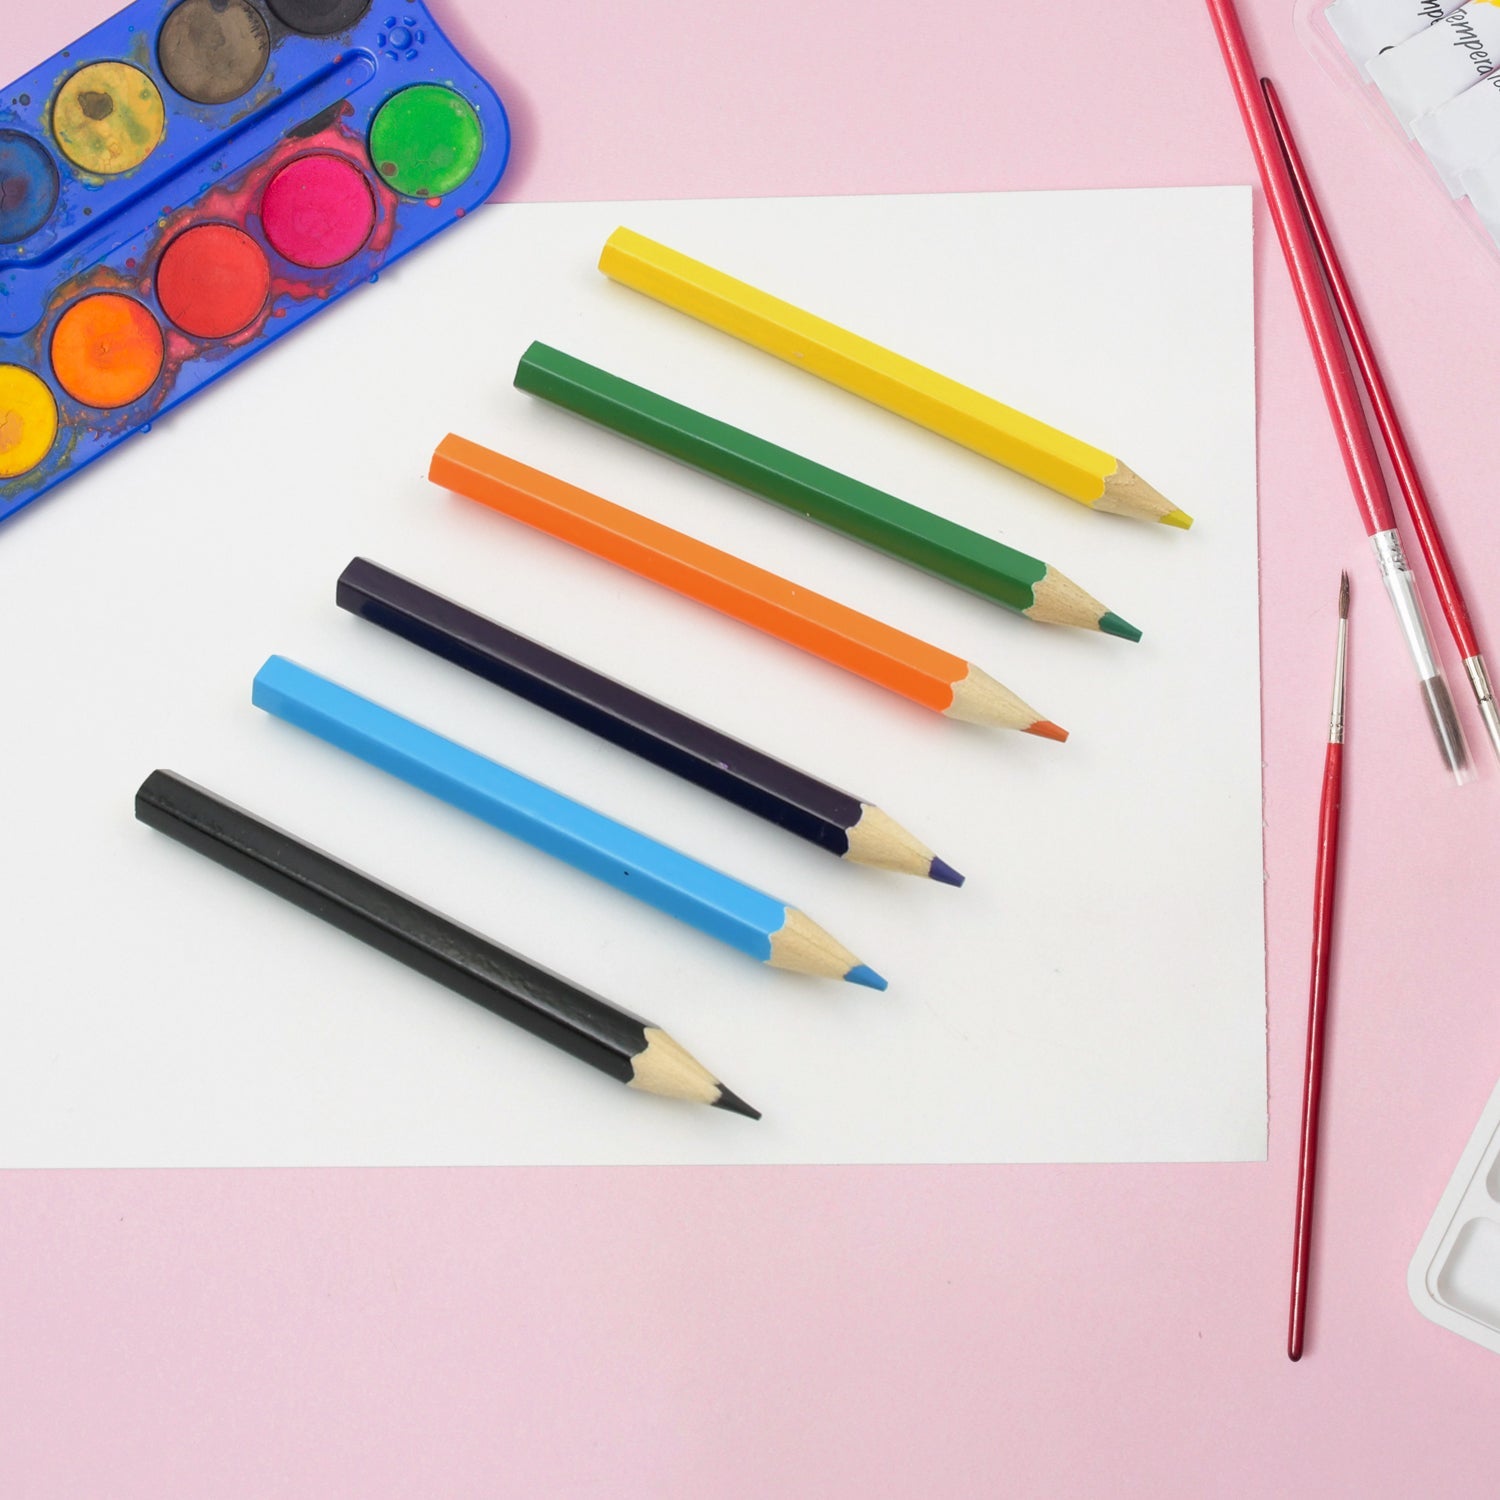 8847  6 pcs Colored Pencils Watercolor Pencils  Artist Pencils Colored Pencil Art Graphite Pencils Oil Pencils Pencil for Kids Art Supplies Child Gift Wooden Aldult (6 Pcs Set)